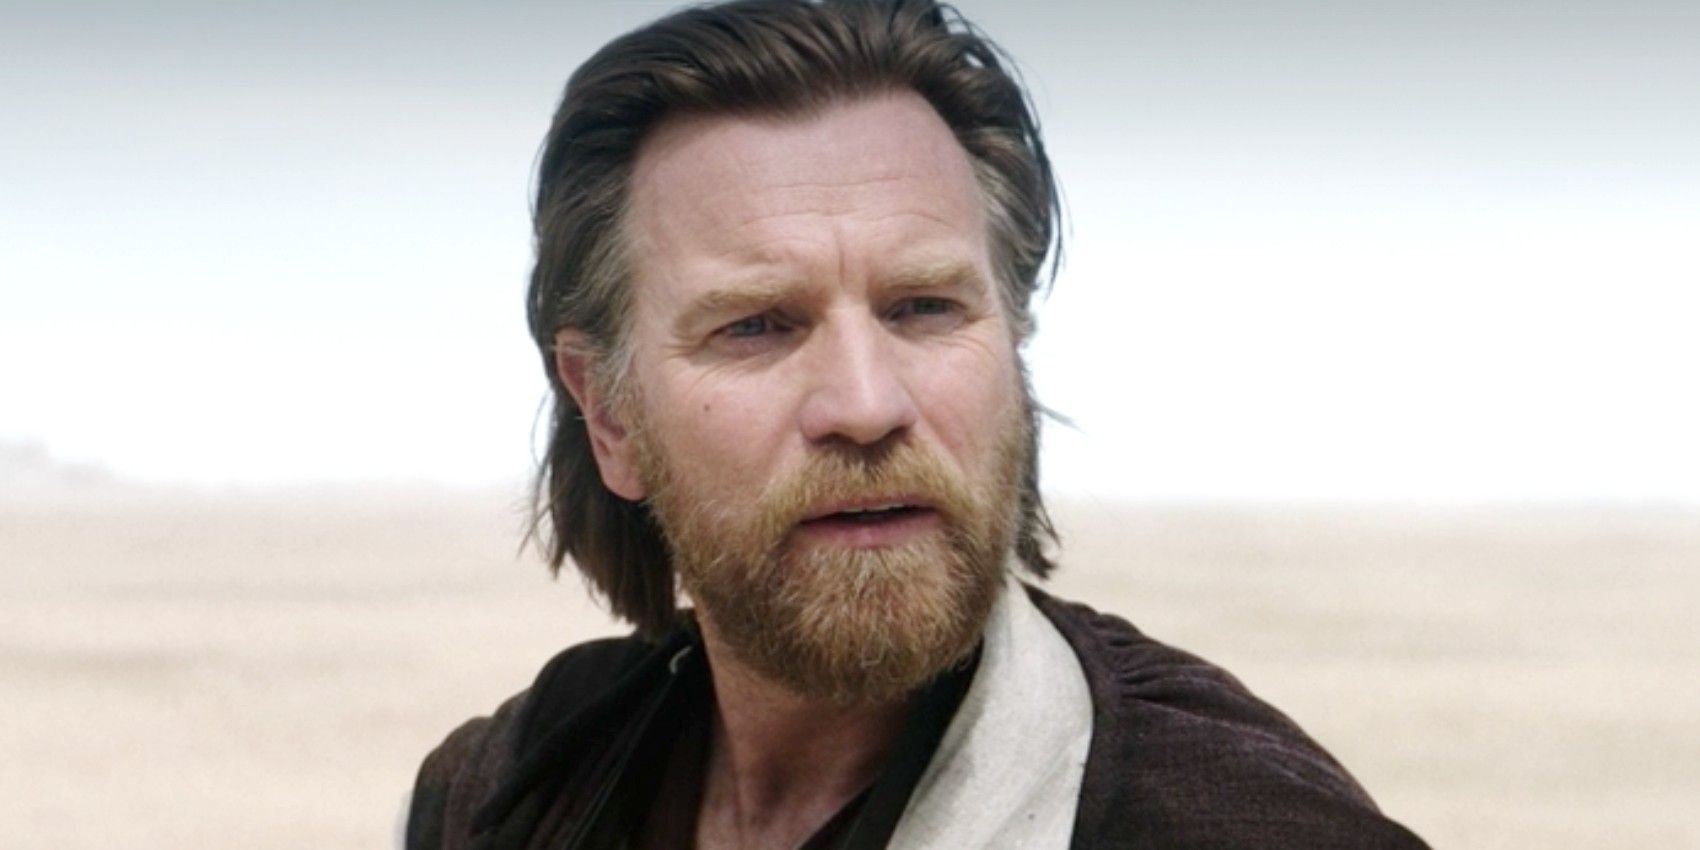 Obi-Wan Kenobi in the desert looking puzzled.